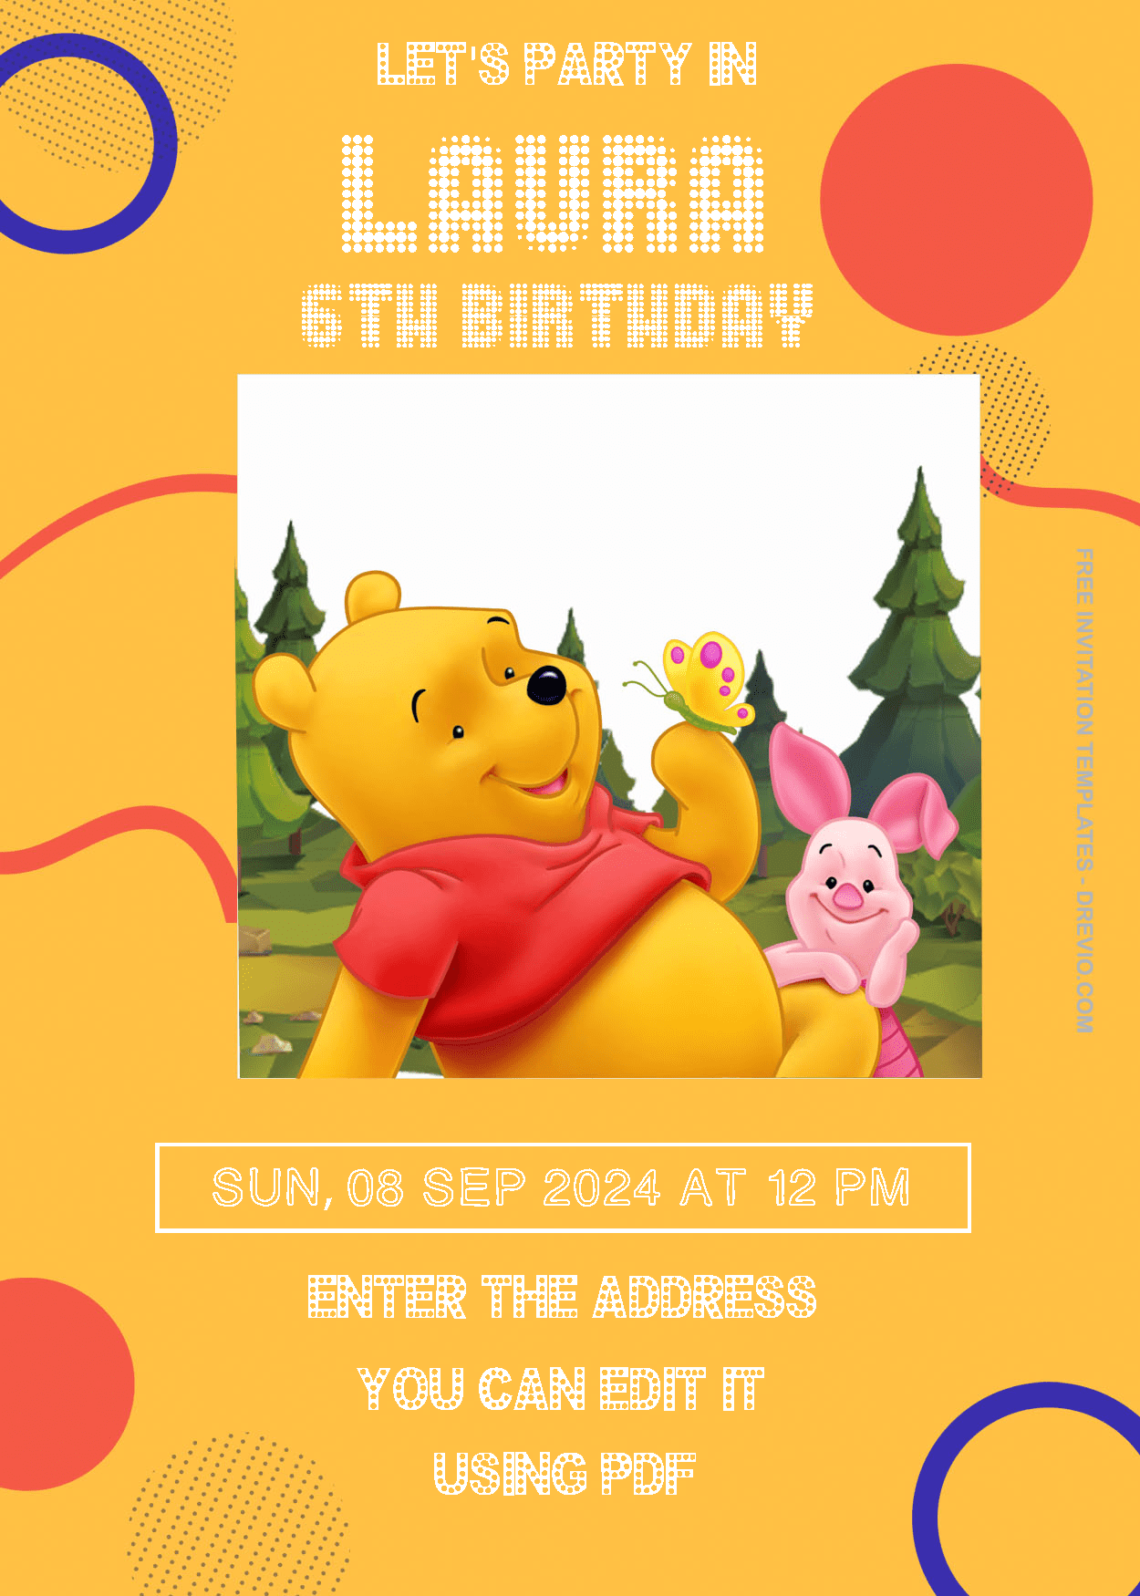 ( Free Editable PDF ) Winnie The Pooh In The House Birthday Invitation Templates Three